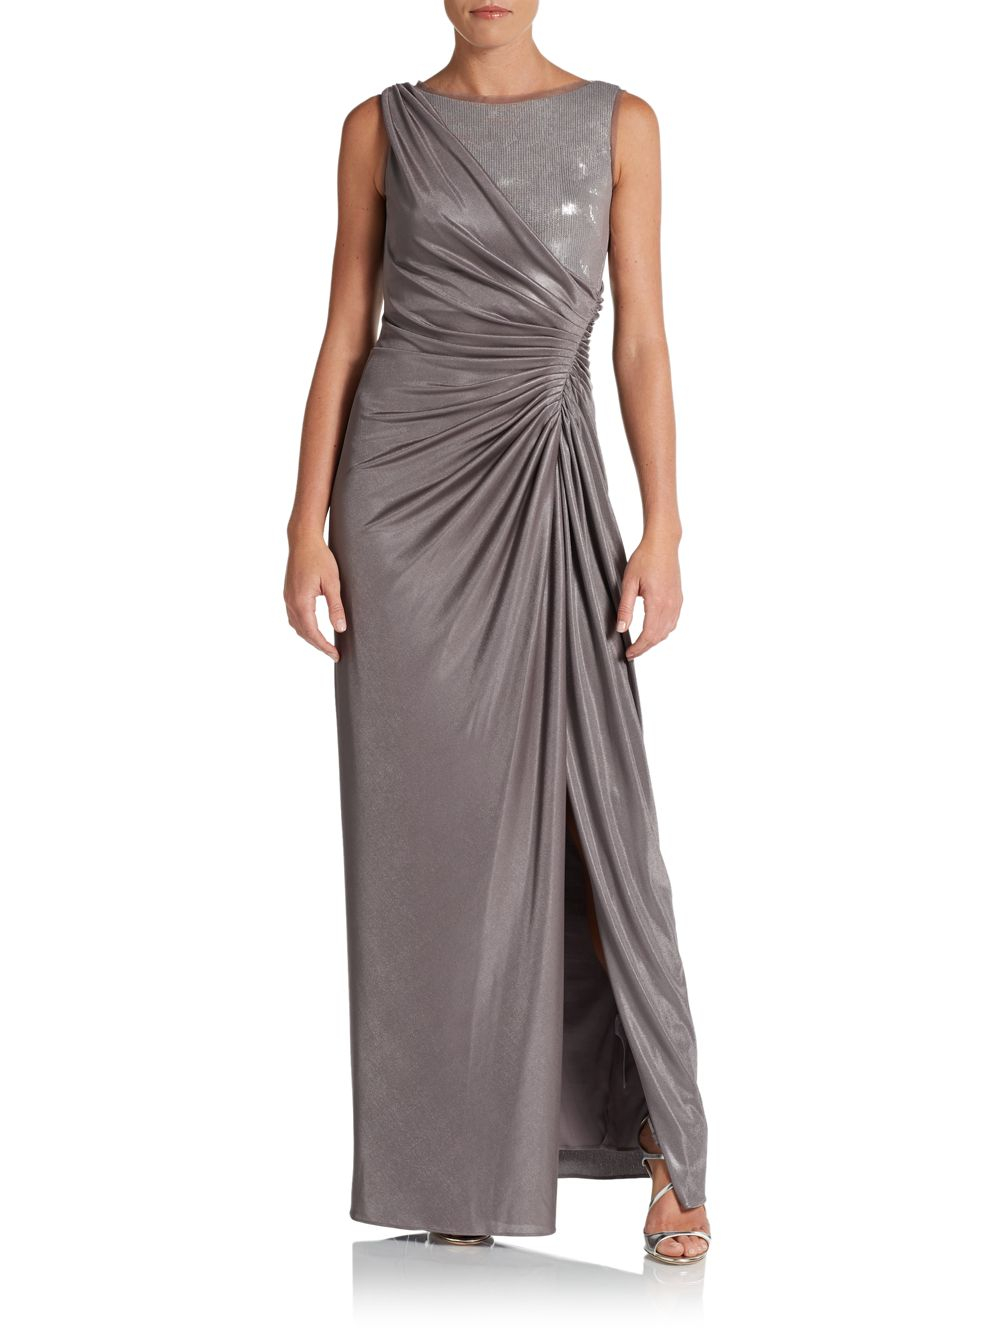 Adrianna Papell Metallic Jersey Sequin Evening Dress in Silver